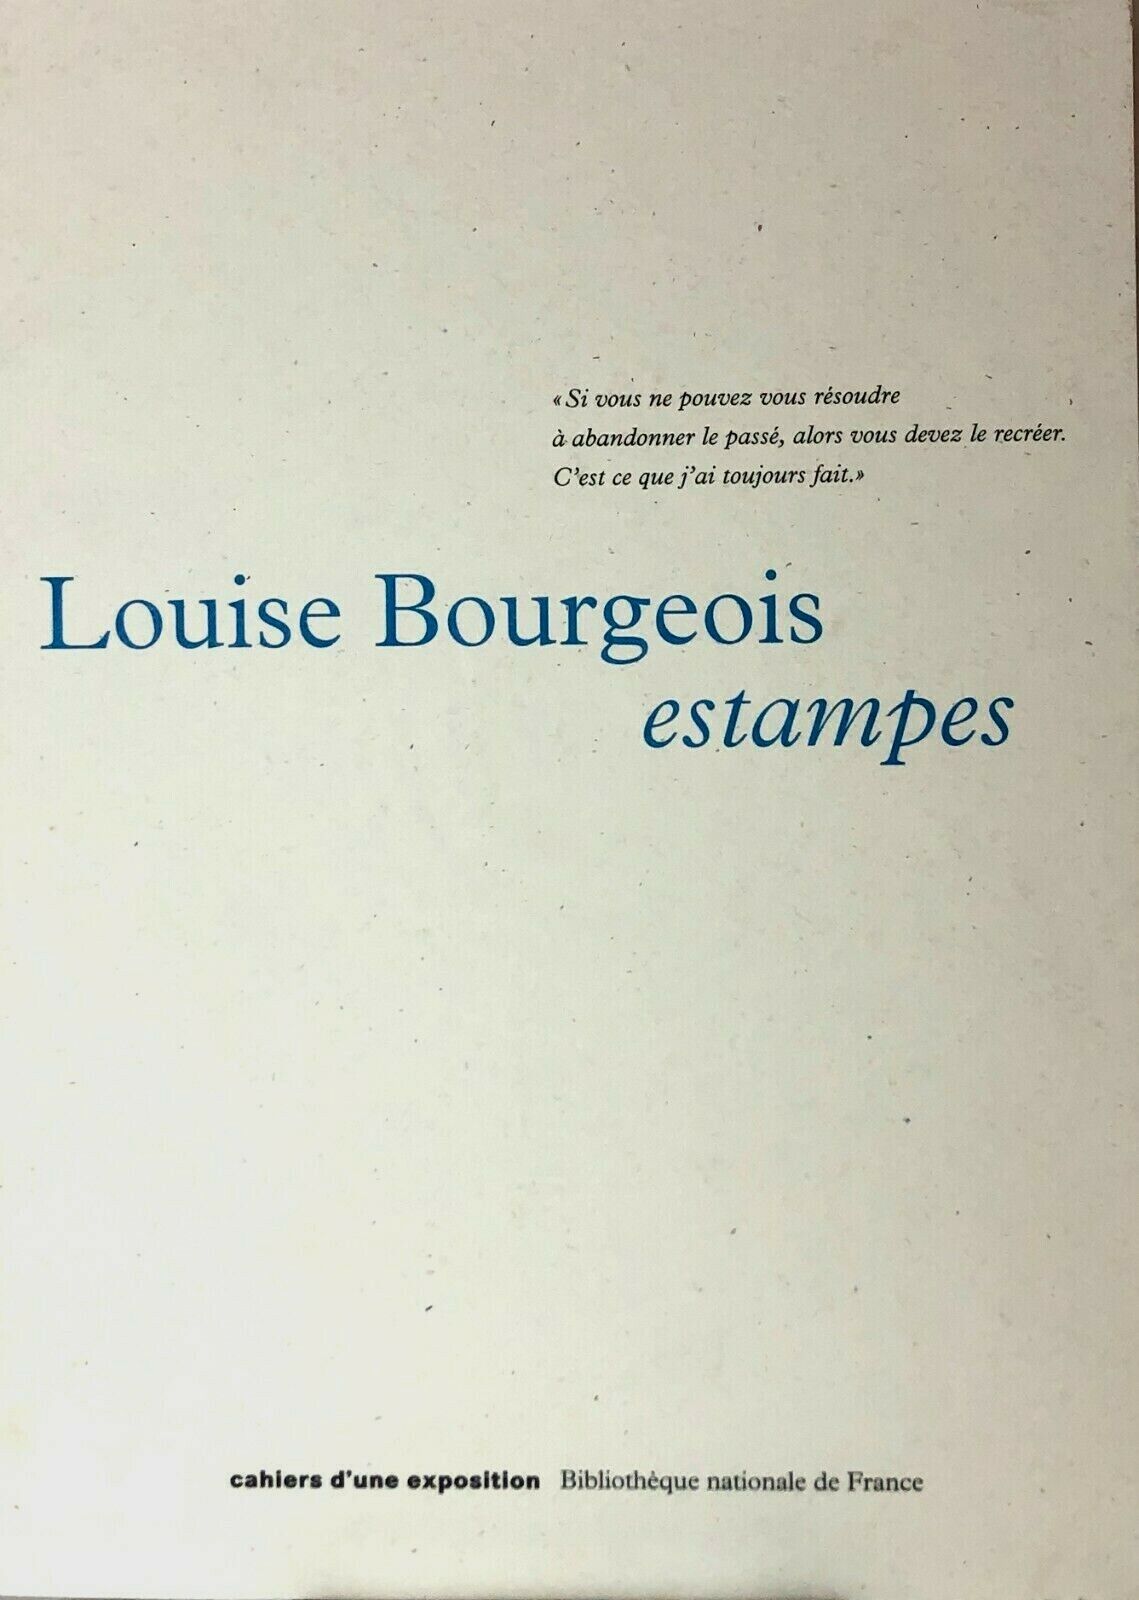 Louise Bourgeois: estampes catalog 1995, Near Fine